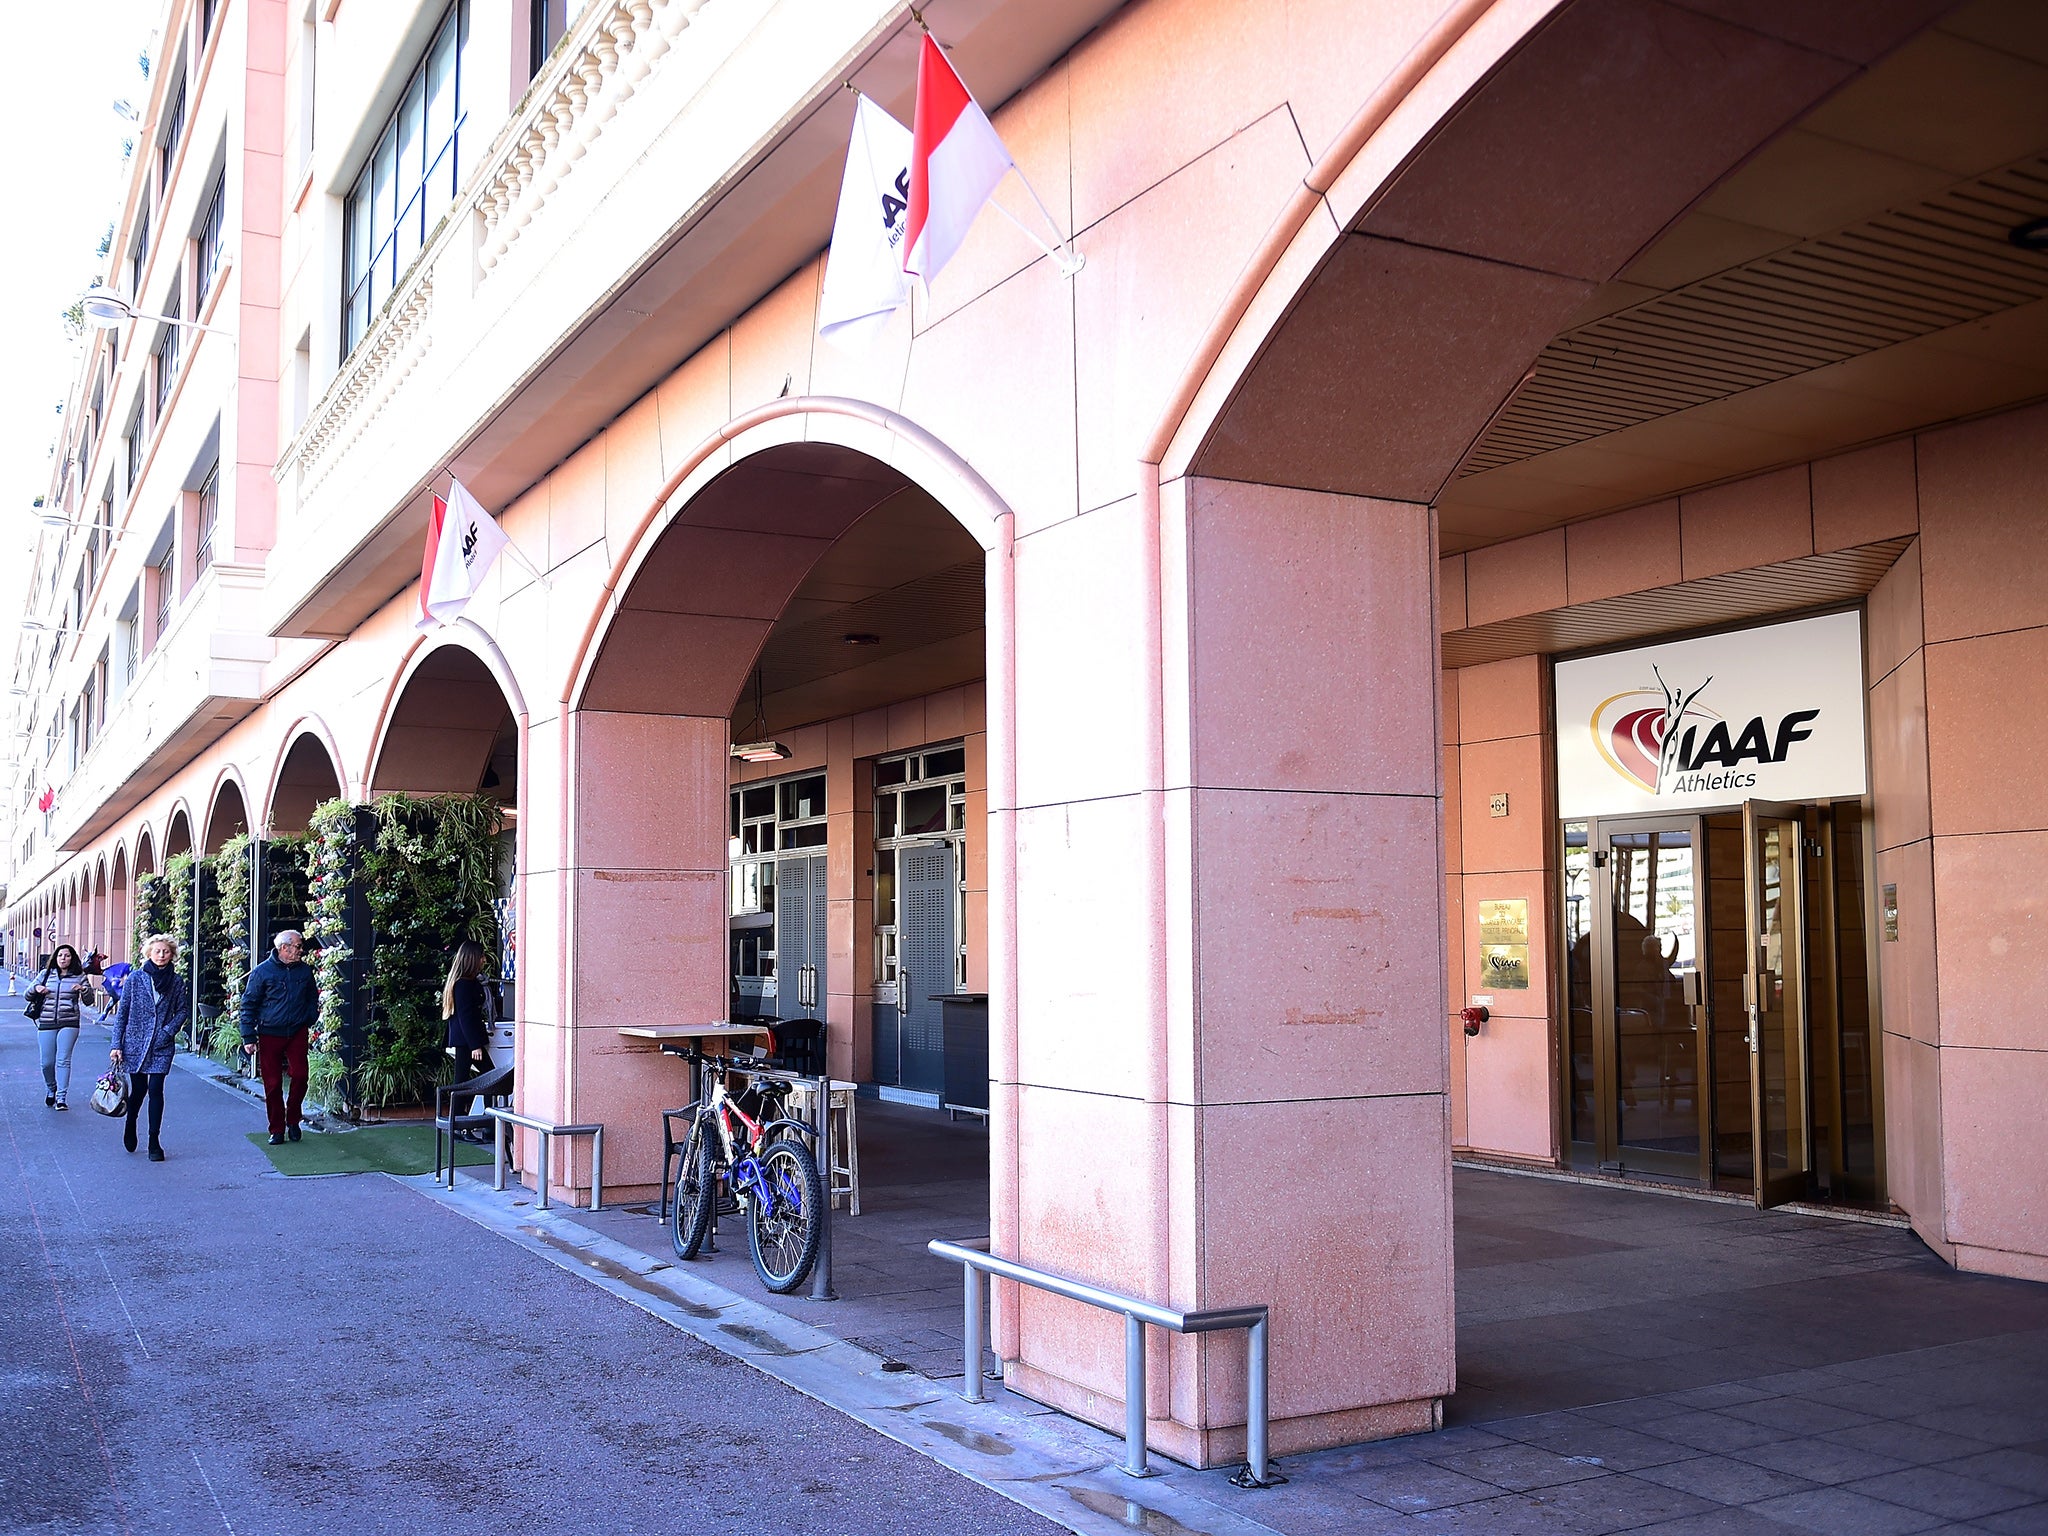 The IAAF's headquarters in Monaco